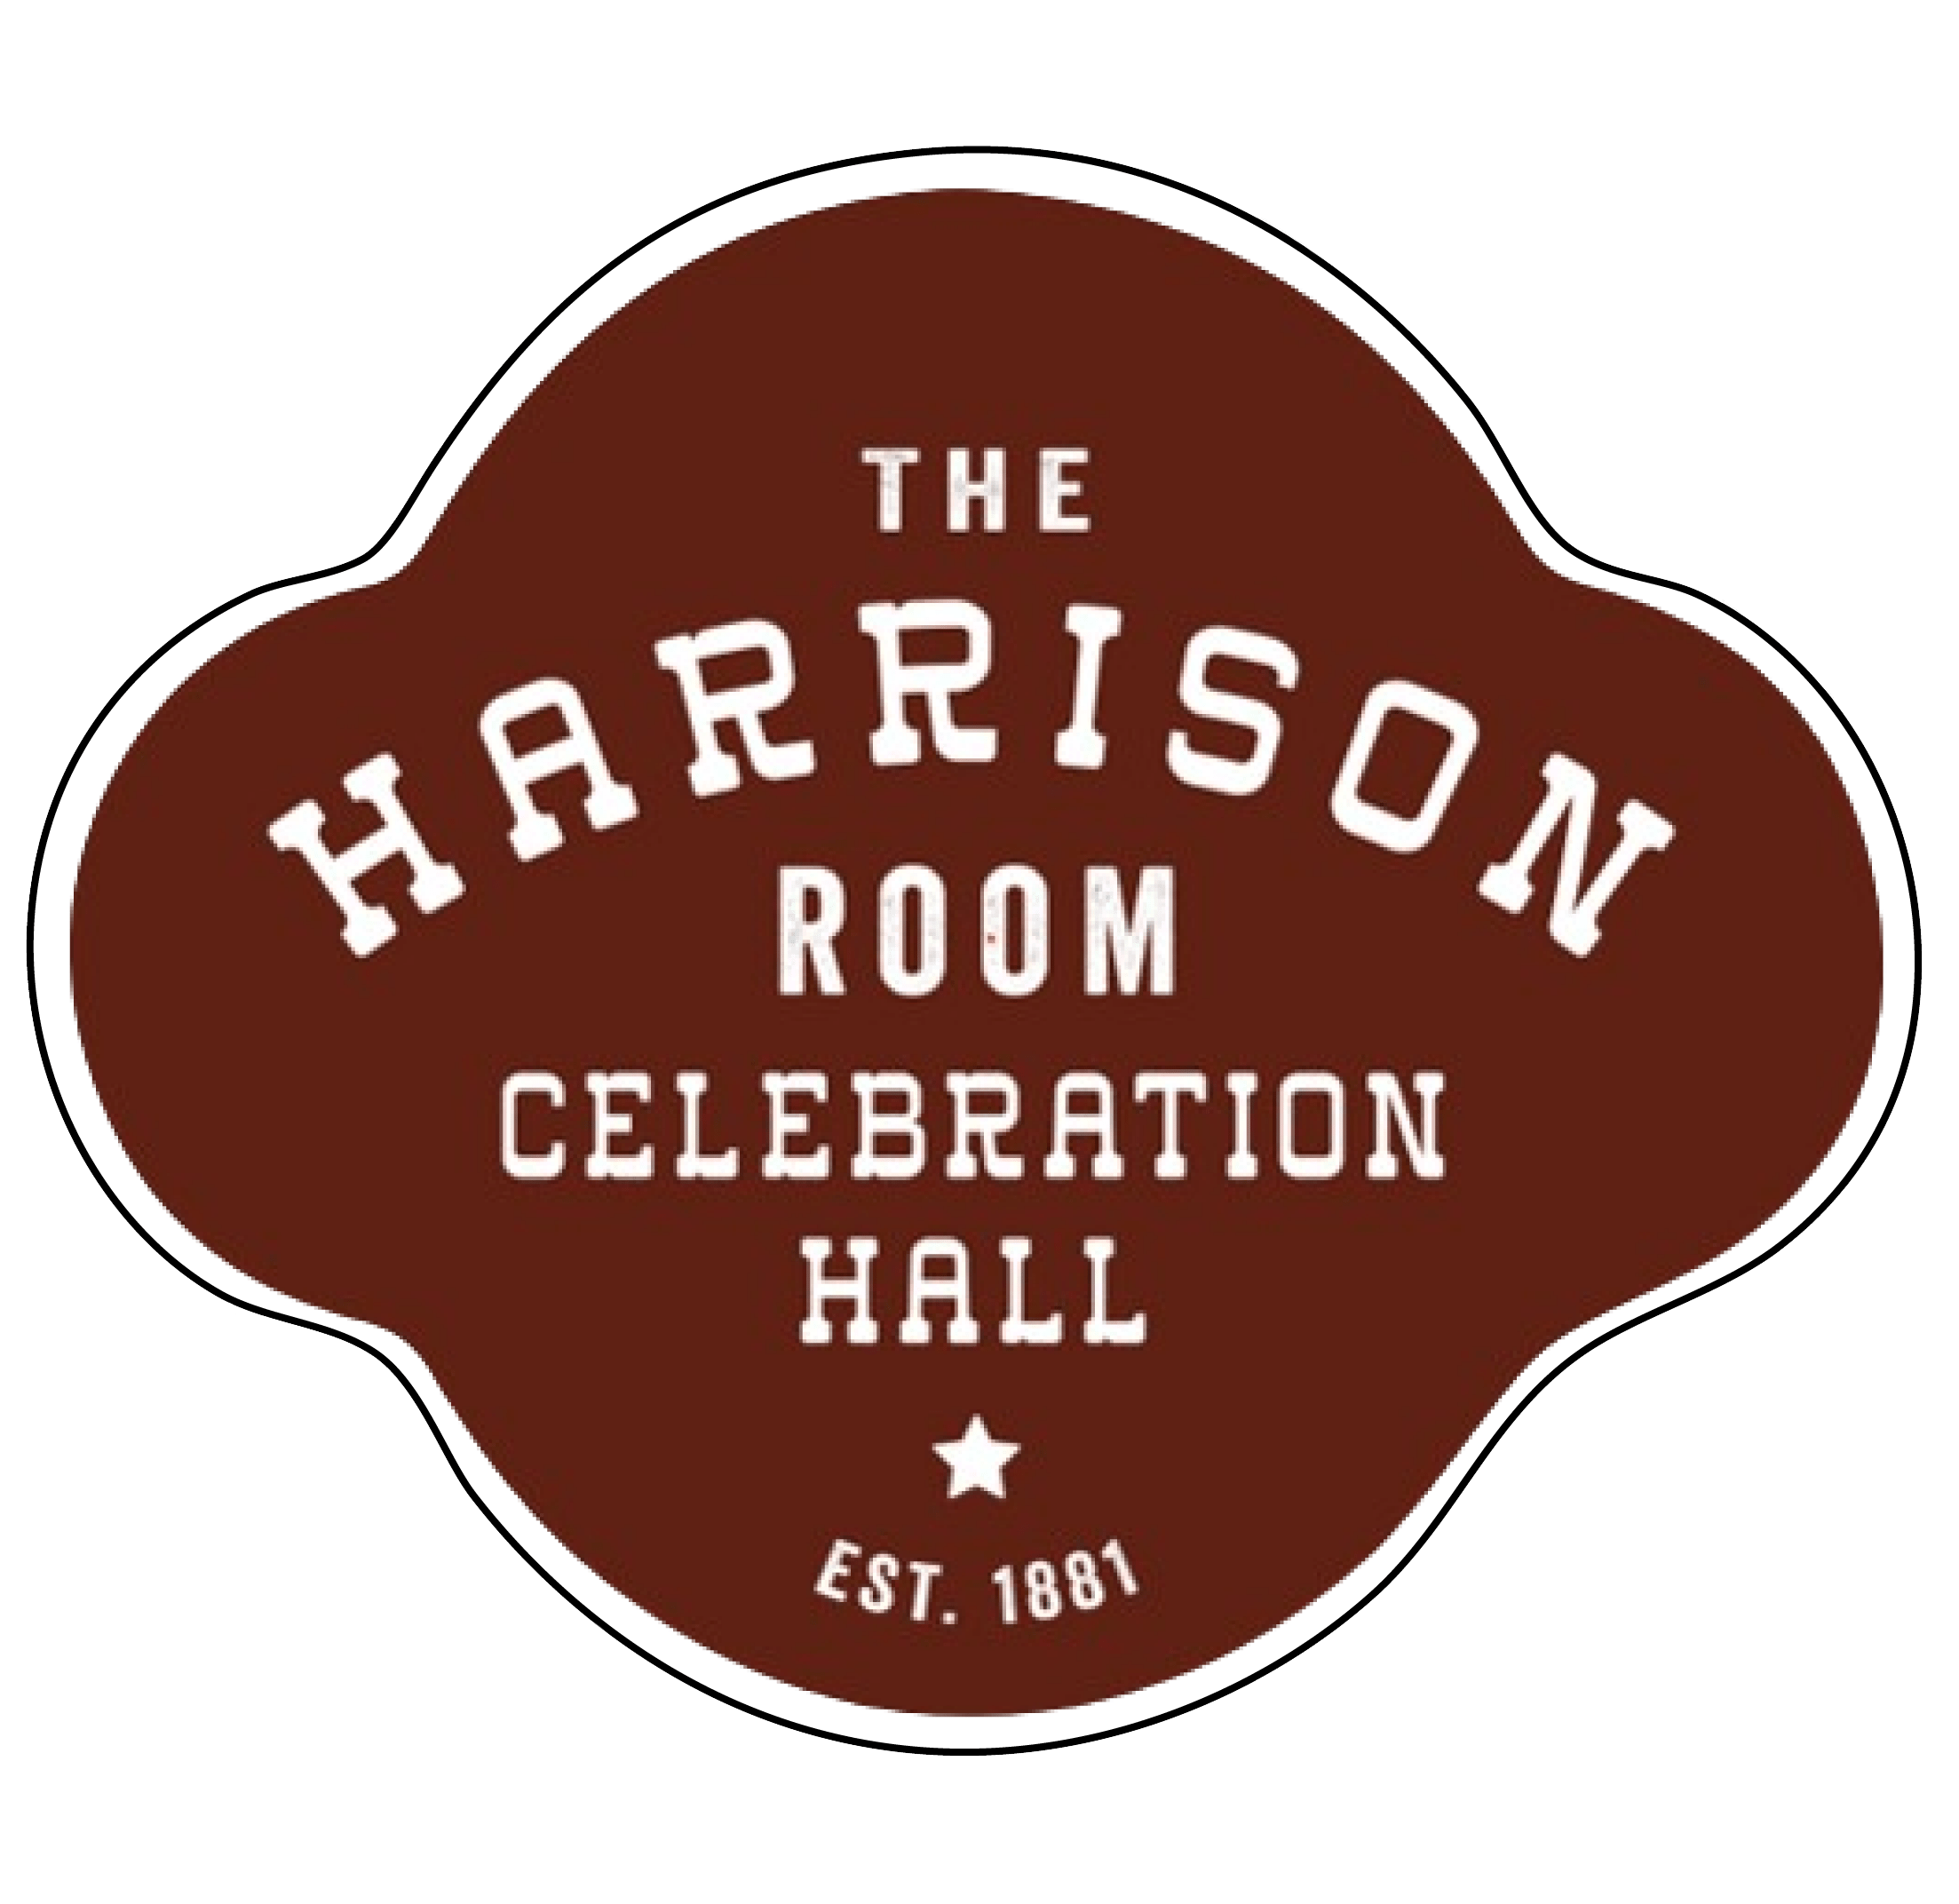 The Harrison Room Celebration Hall